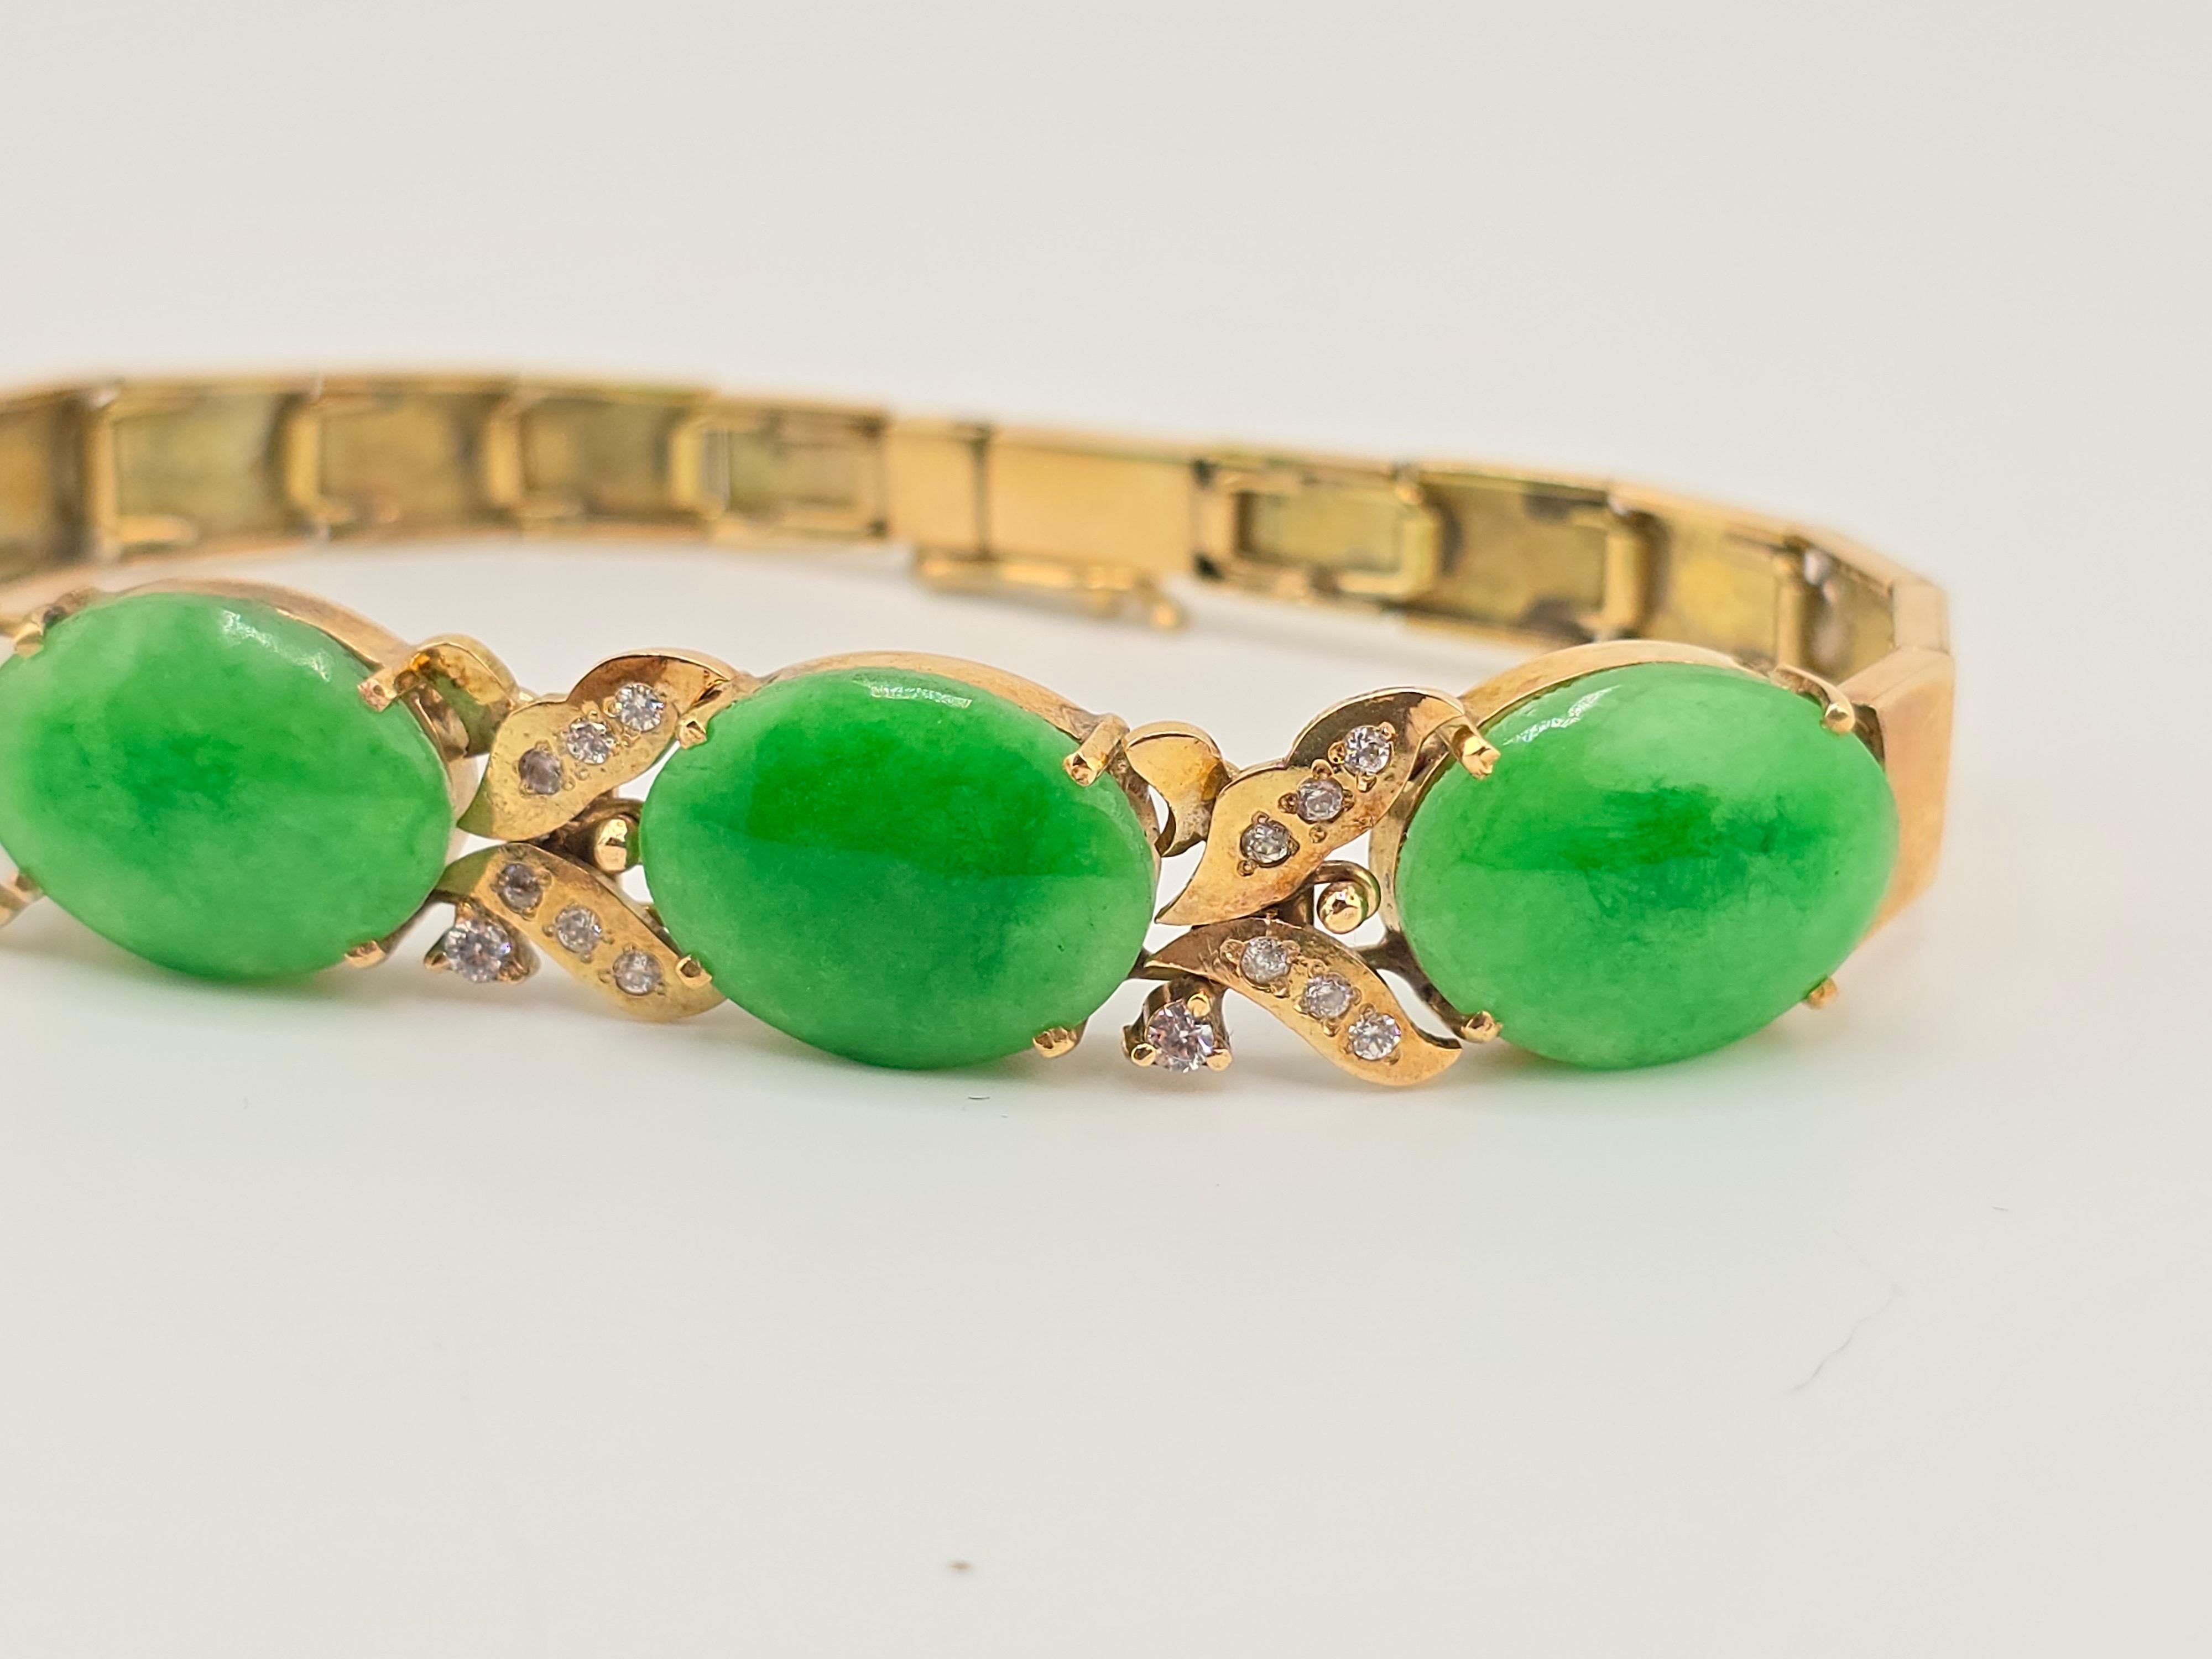 Gorgeous 14K Yellow Gold Diamond & Green Jadeite Jade Bracelet 20.86 Grams For Sale 2